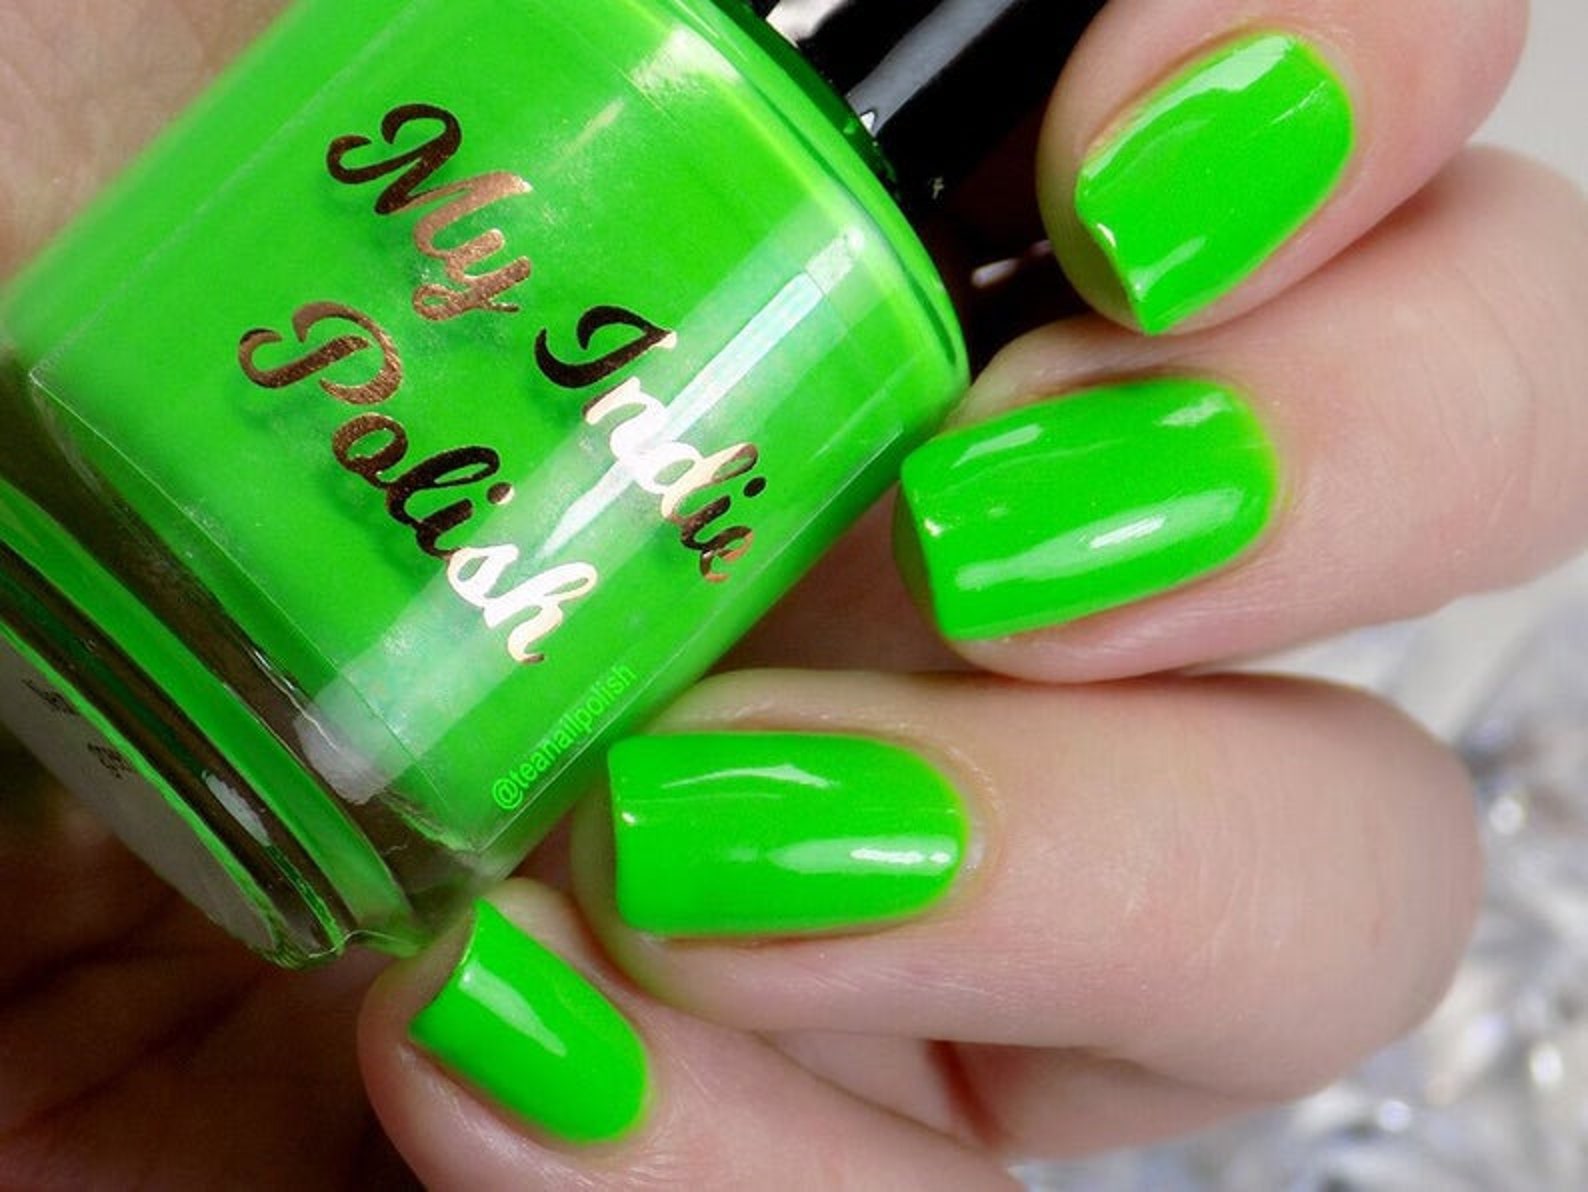 Neon Green Nail Polish Inspiration on Pinterest - wide 9